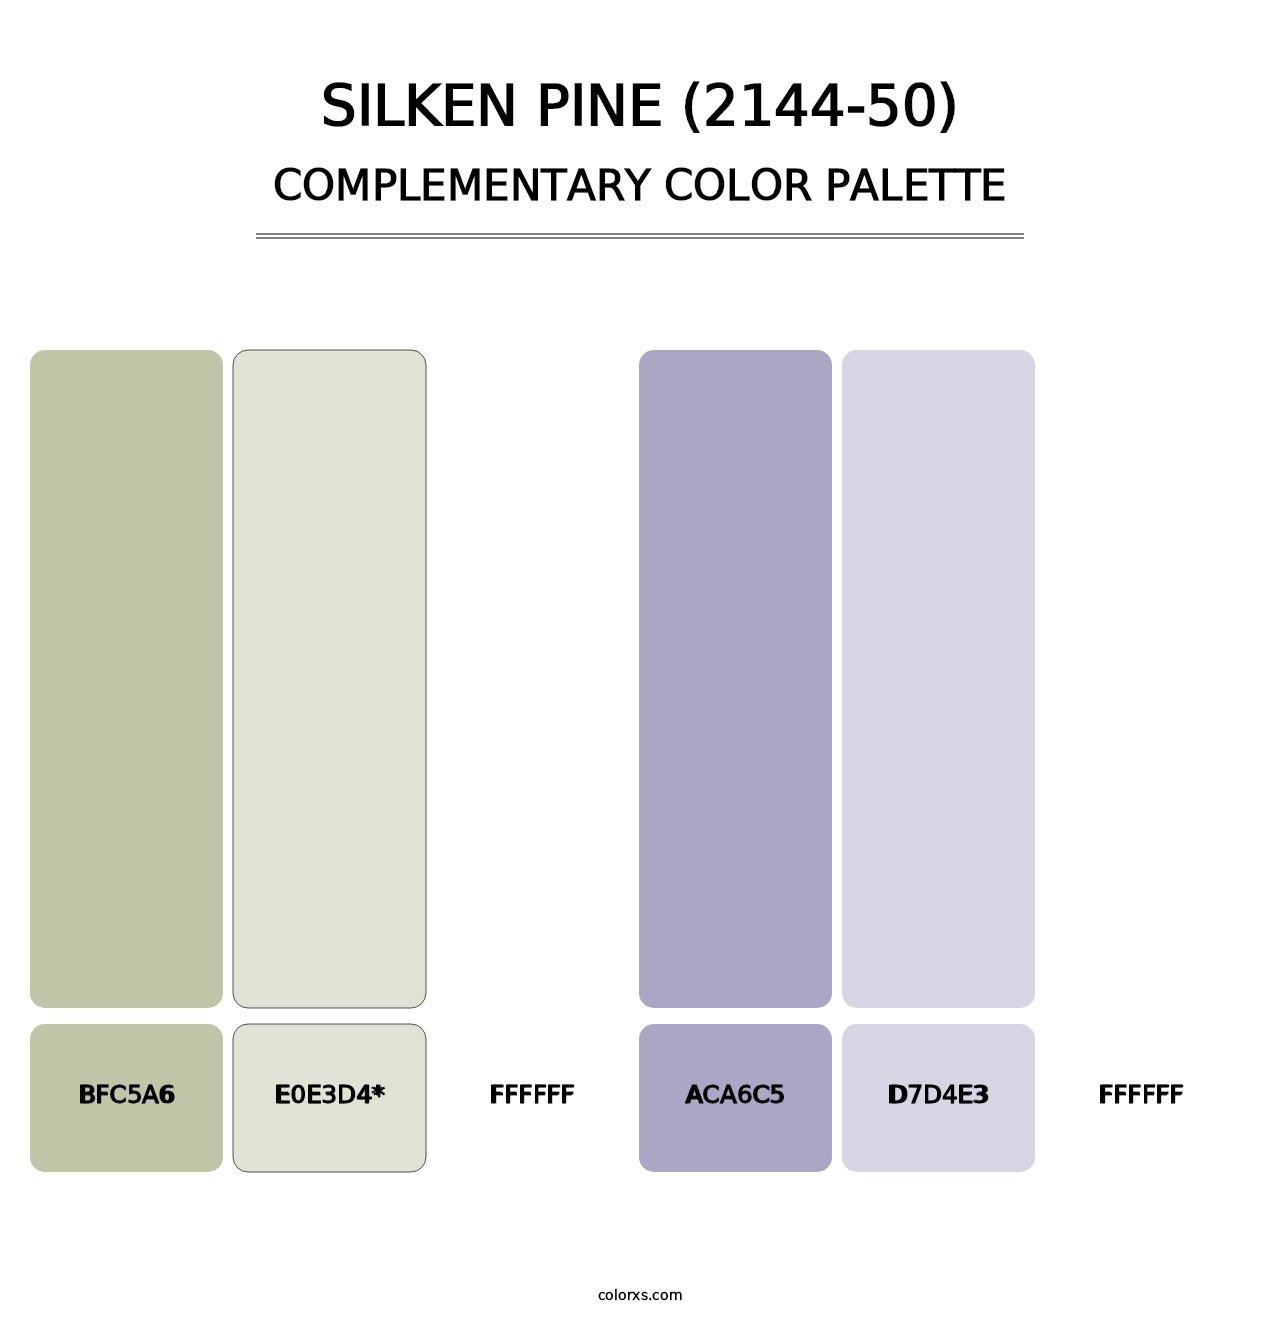 Silken Pine (2144-50) - Complementary Color Palette